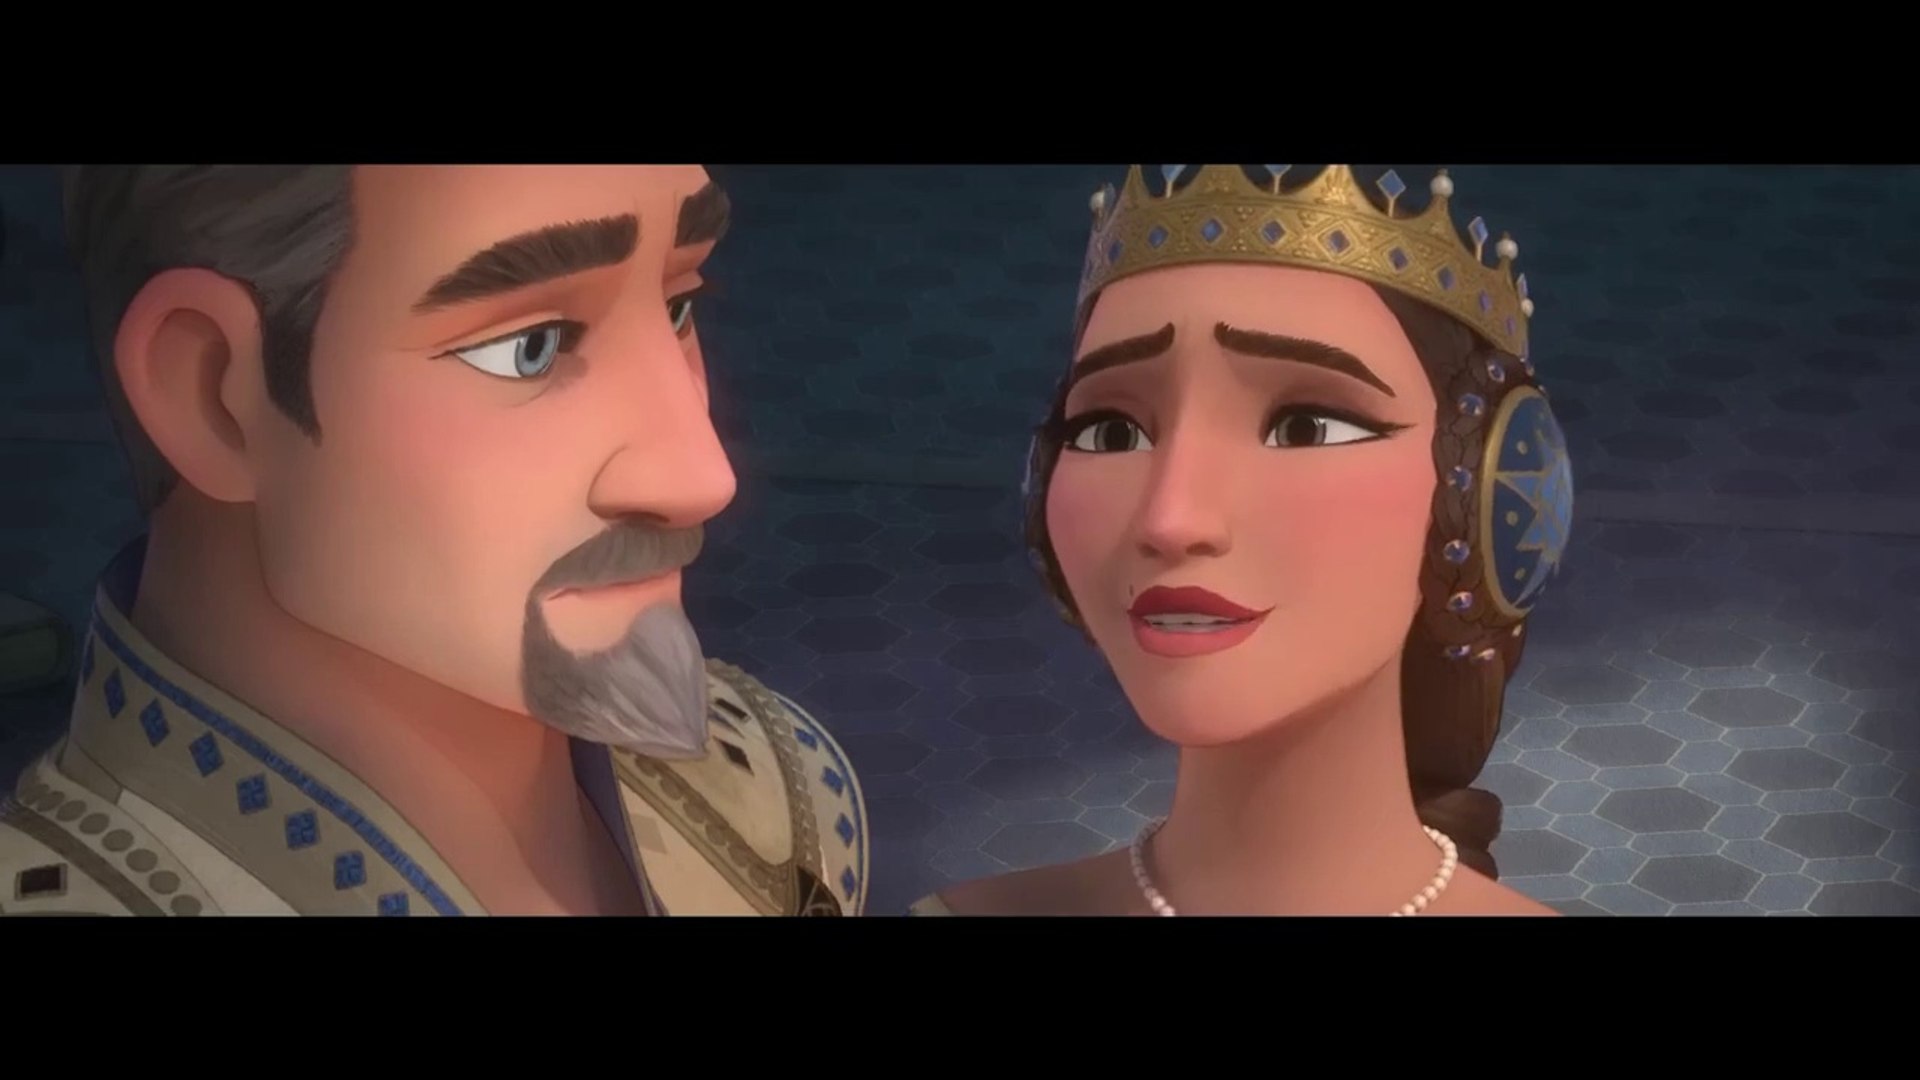 Princess Wala, Singing Elsa In Frozen Movie, disney, HD phone wallpaper